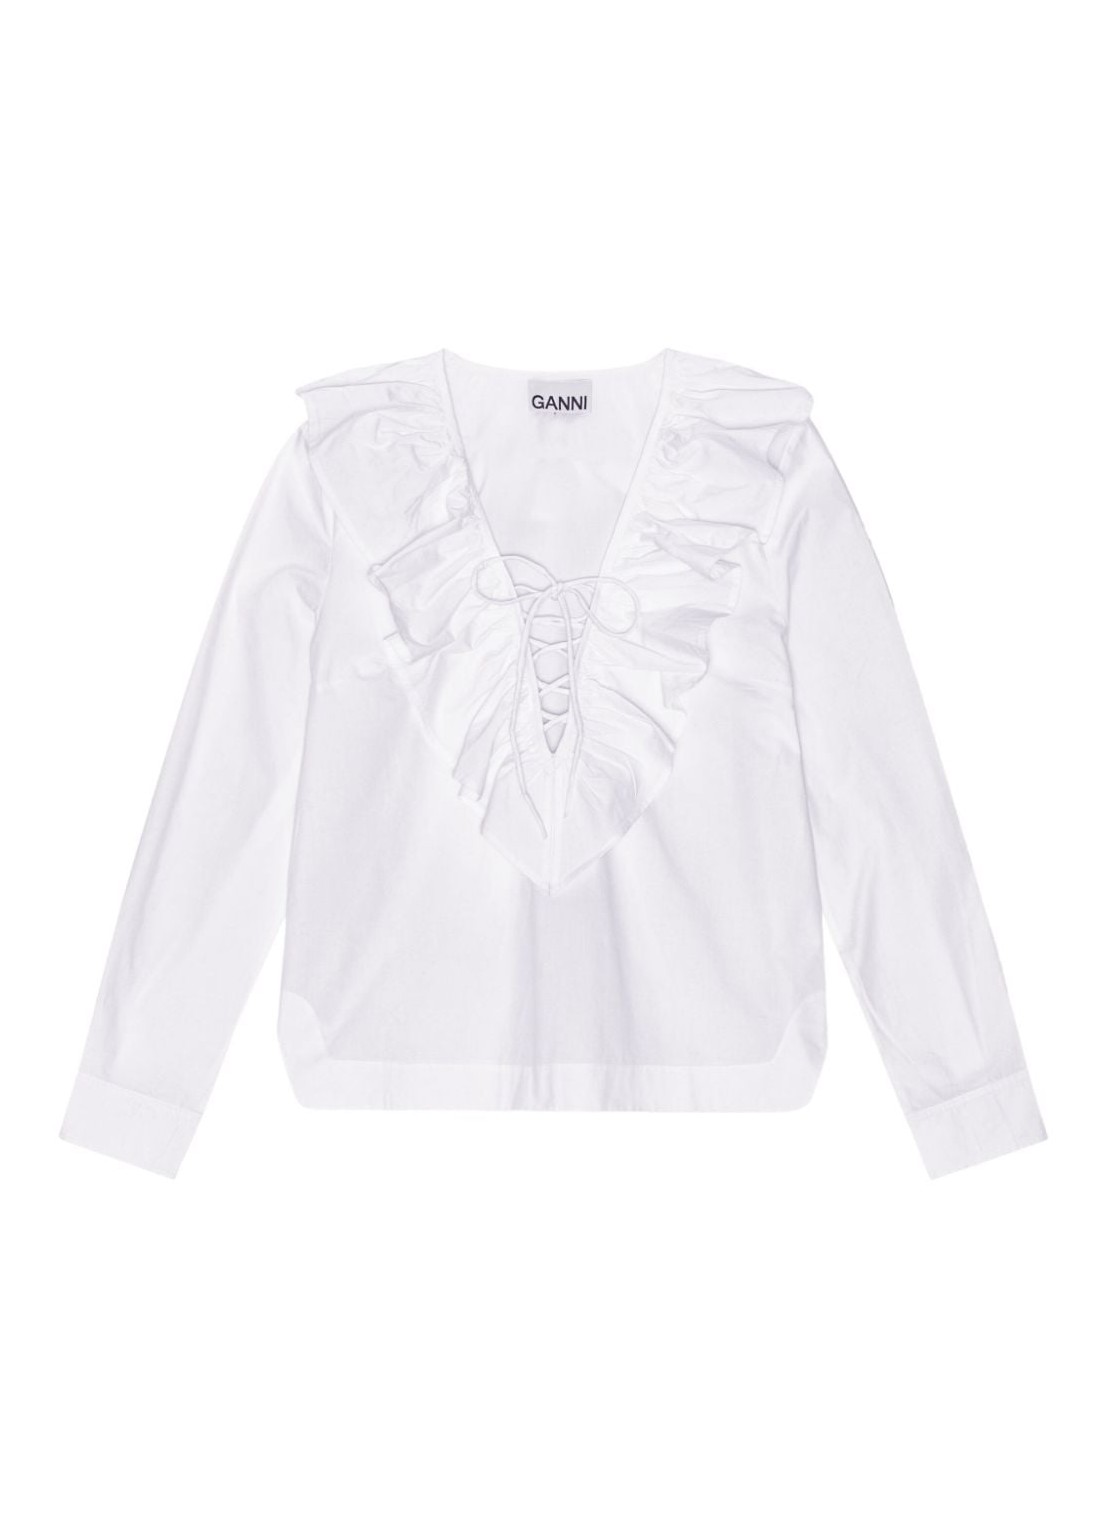 Blusa ganni t-shirt woman cotton poplin ruffle v-neck blouse f8701 151 talla blanco
 